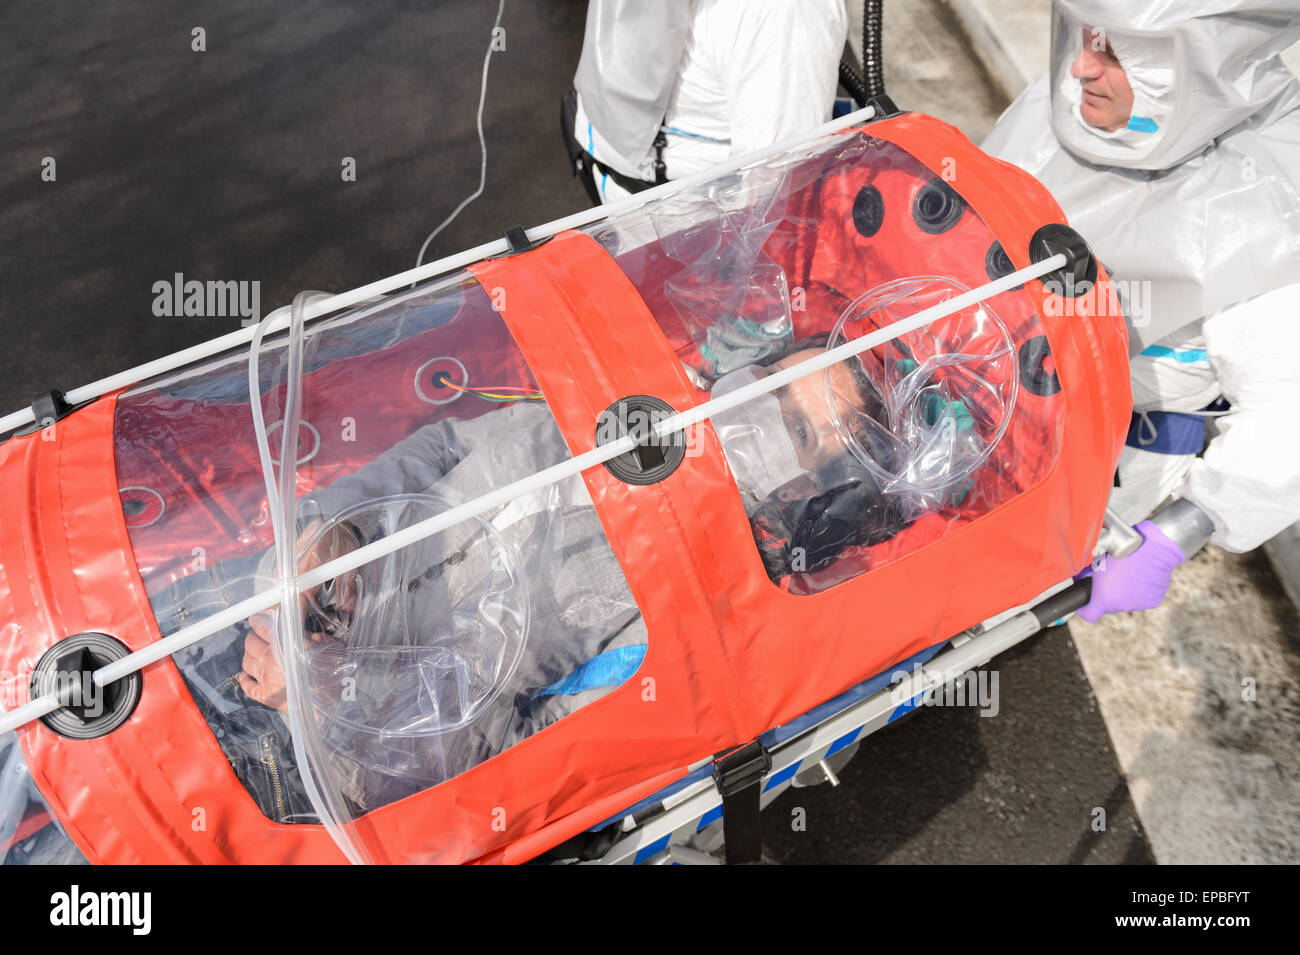 Biohazard team with virus patient in stretcher Stock Photo